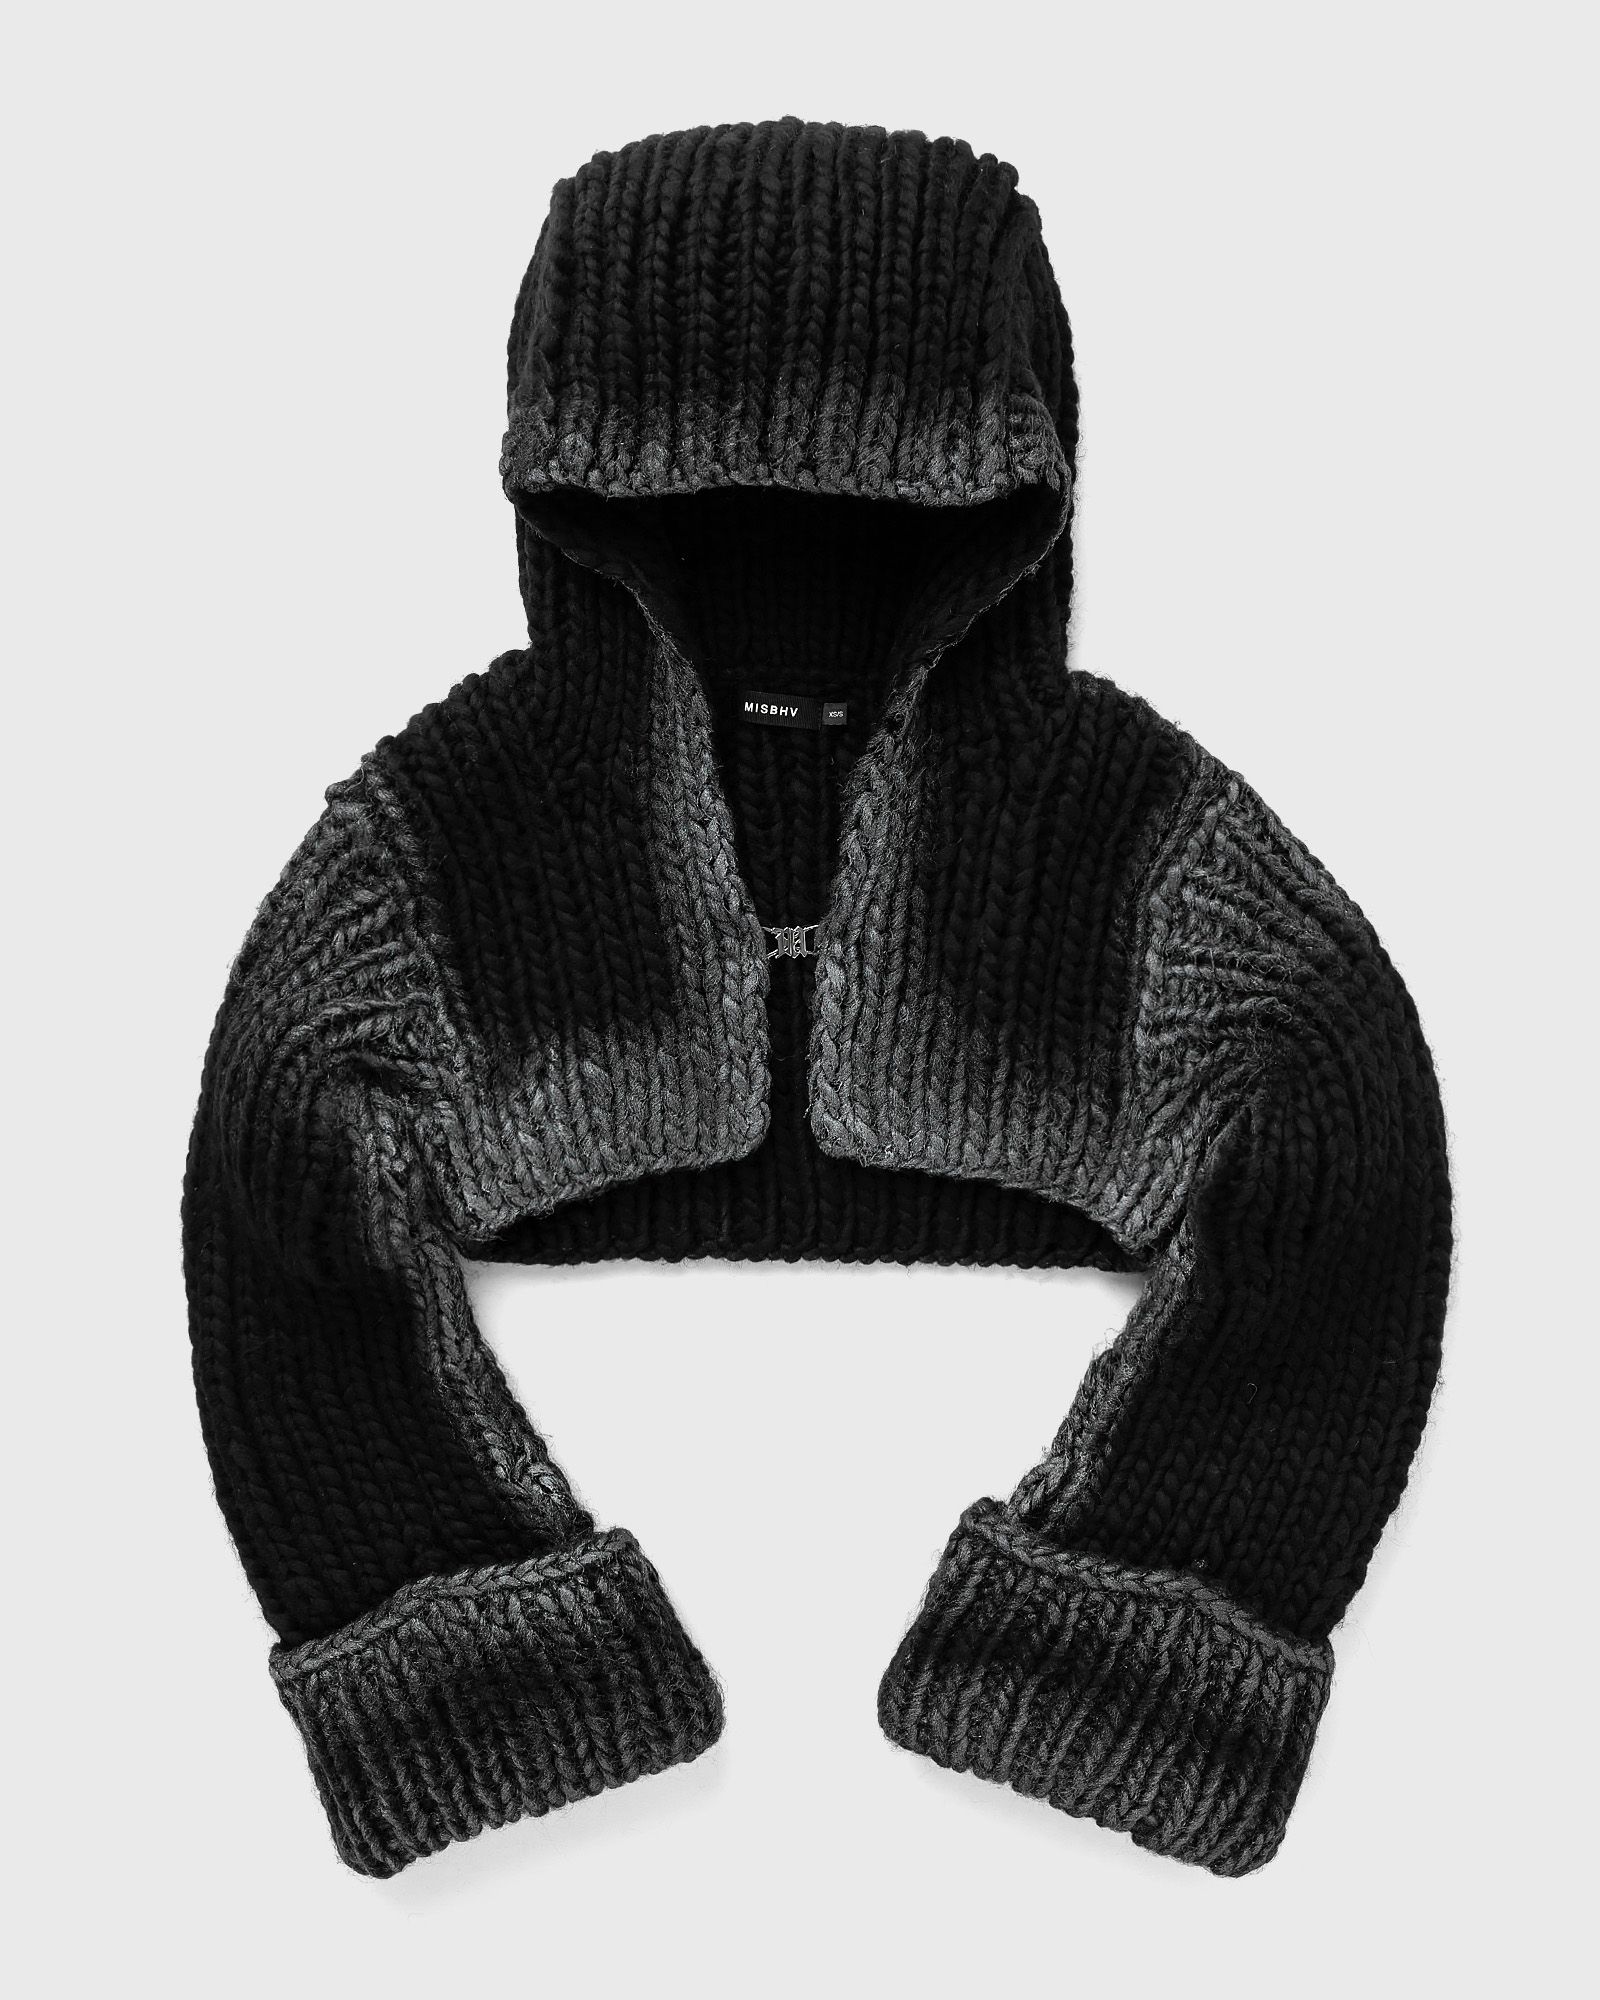 MISBHV - bulky wax knitted hooded top women hoodies|zippers & cardigans black in größe:m/l